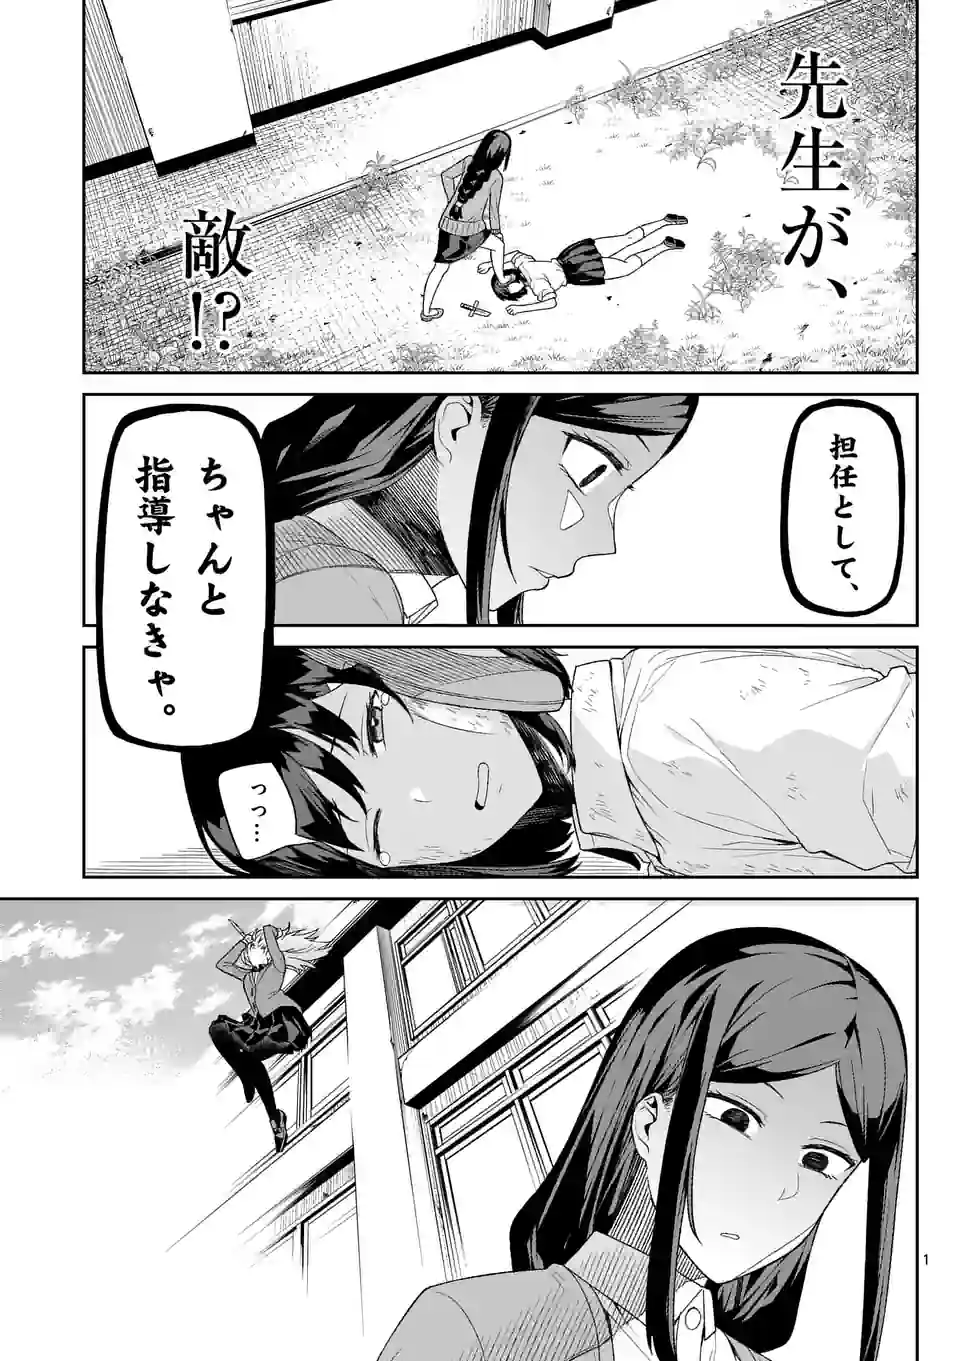 Bakemono Goroshi no Psycholily - Chapter 8 - Page 1